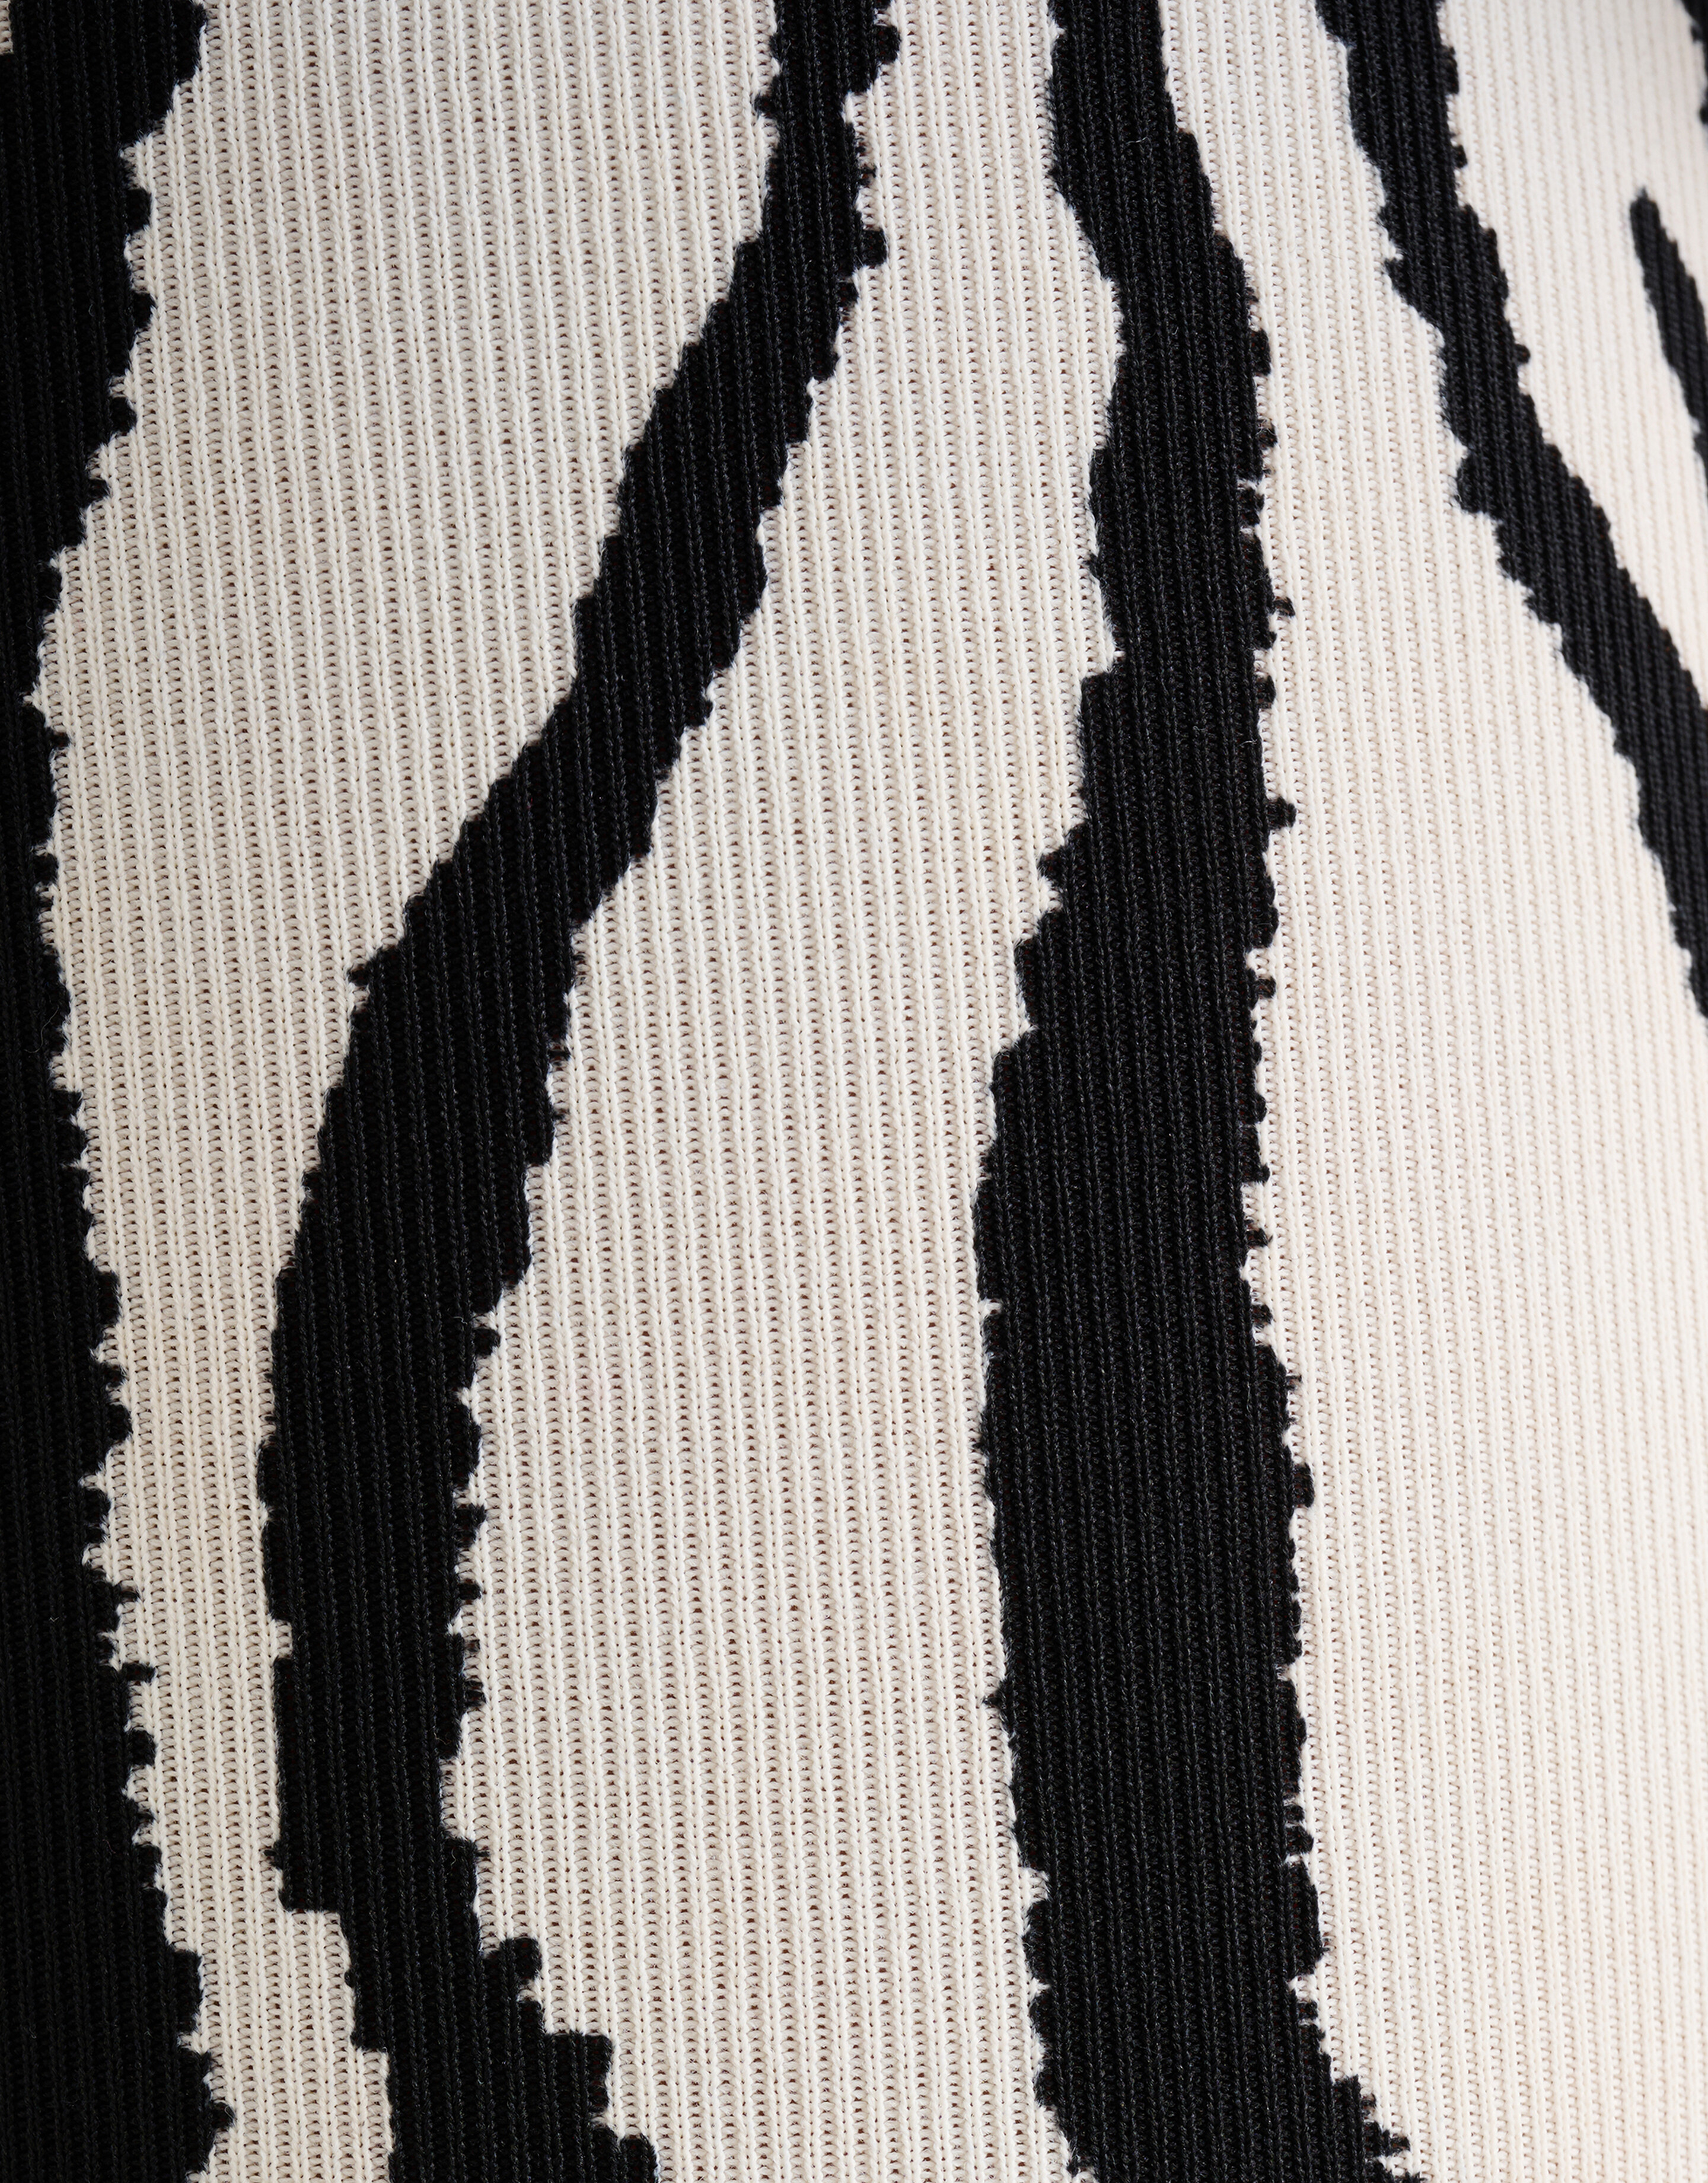 Zebra Print Legging Schwarz/Weiß SHOEBY WOMEN